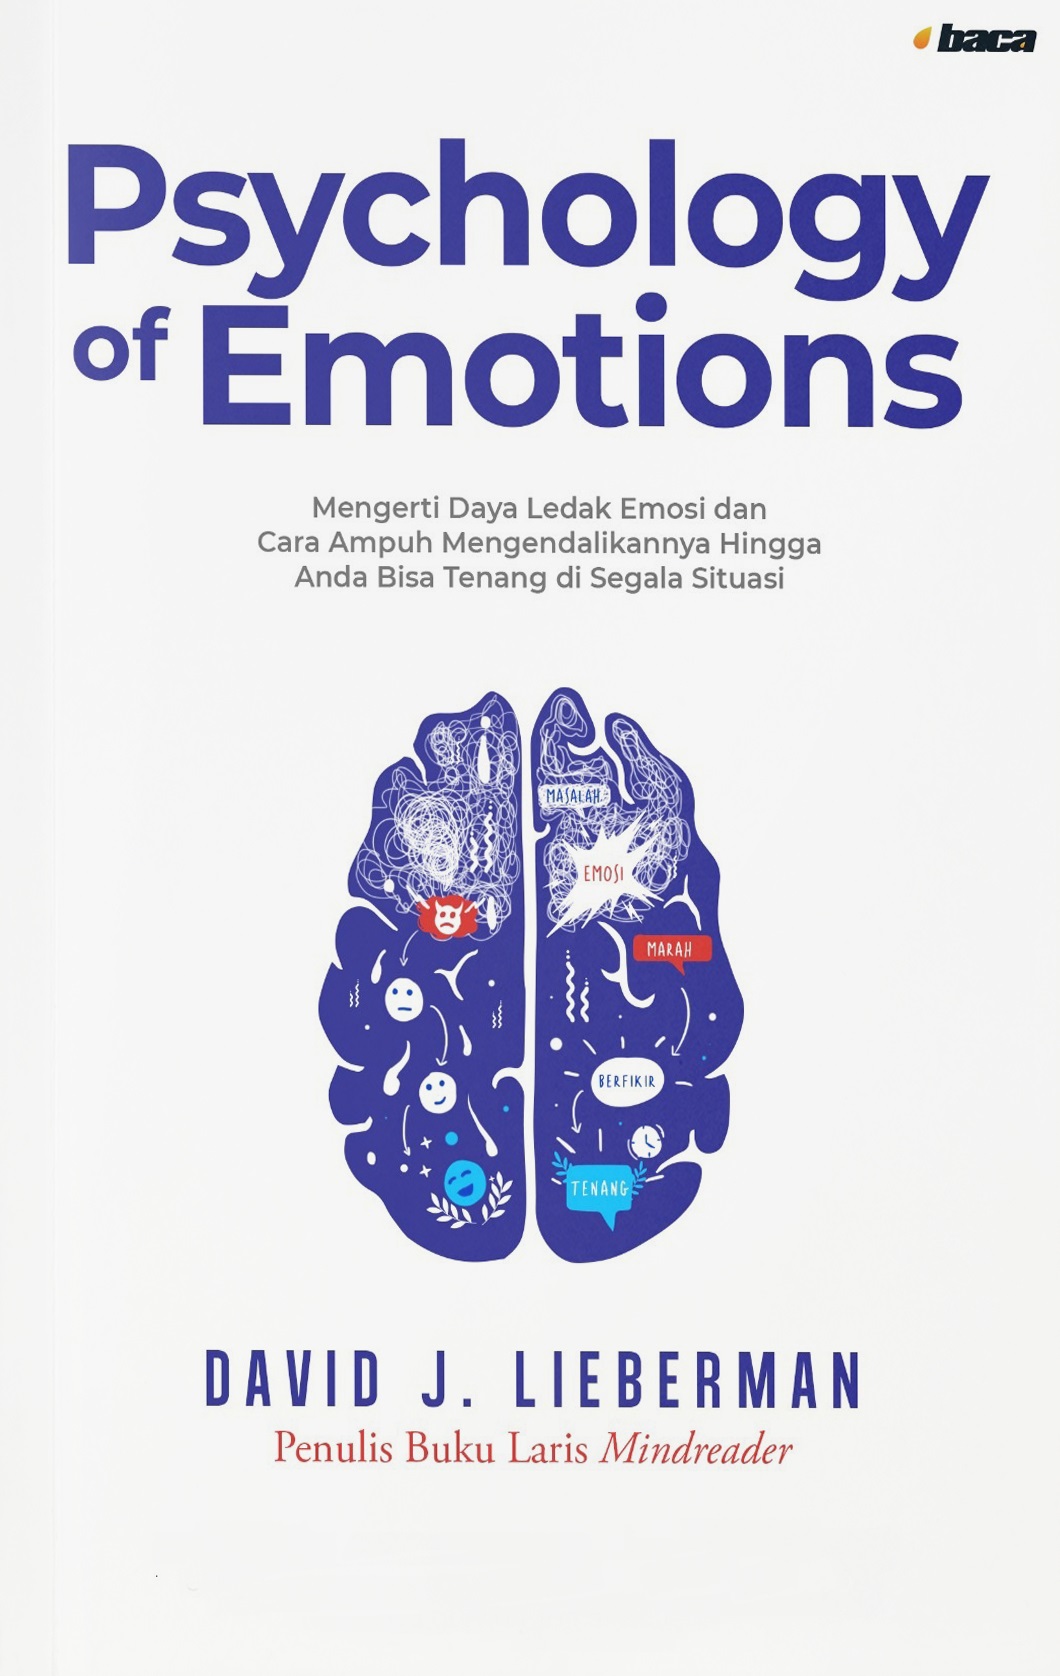 The psychology of emotion